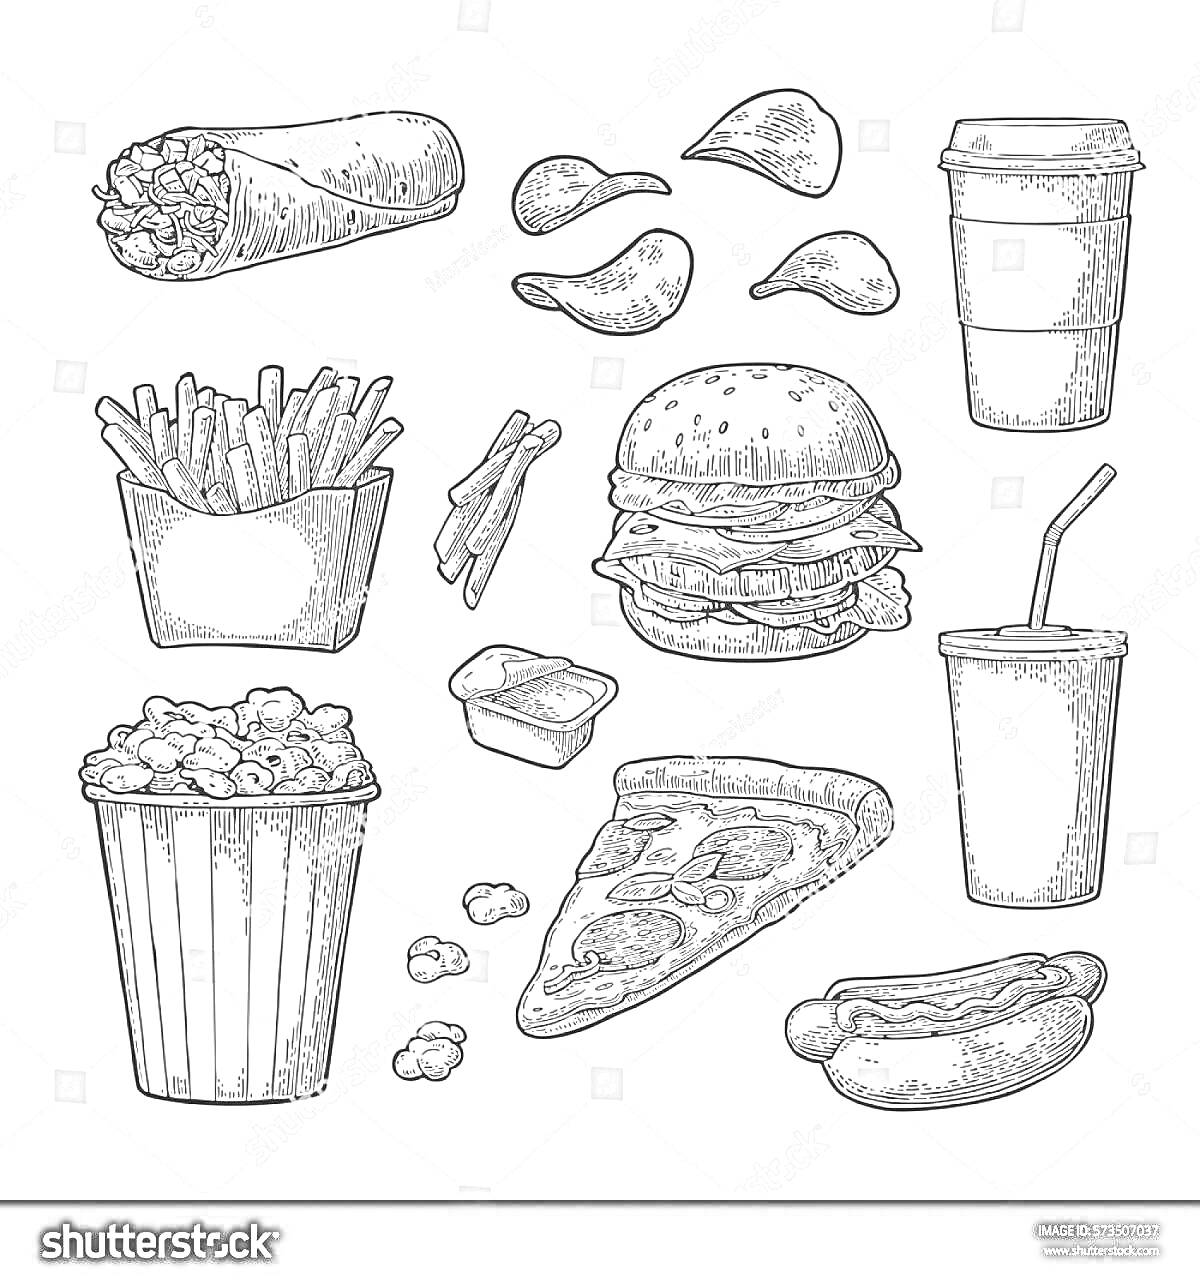 Раскраска Чипсы, кофе, буррито, жареная картошка, соус, бургер, сэндвич, попкорн, пицца, газировка, хот-дог.